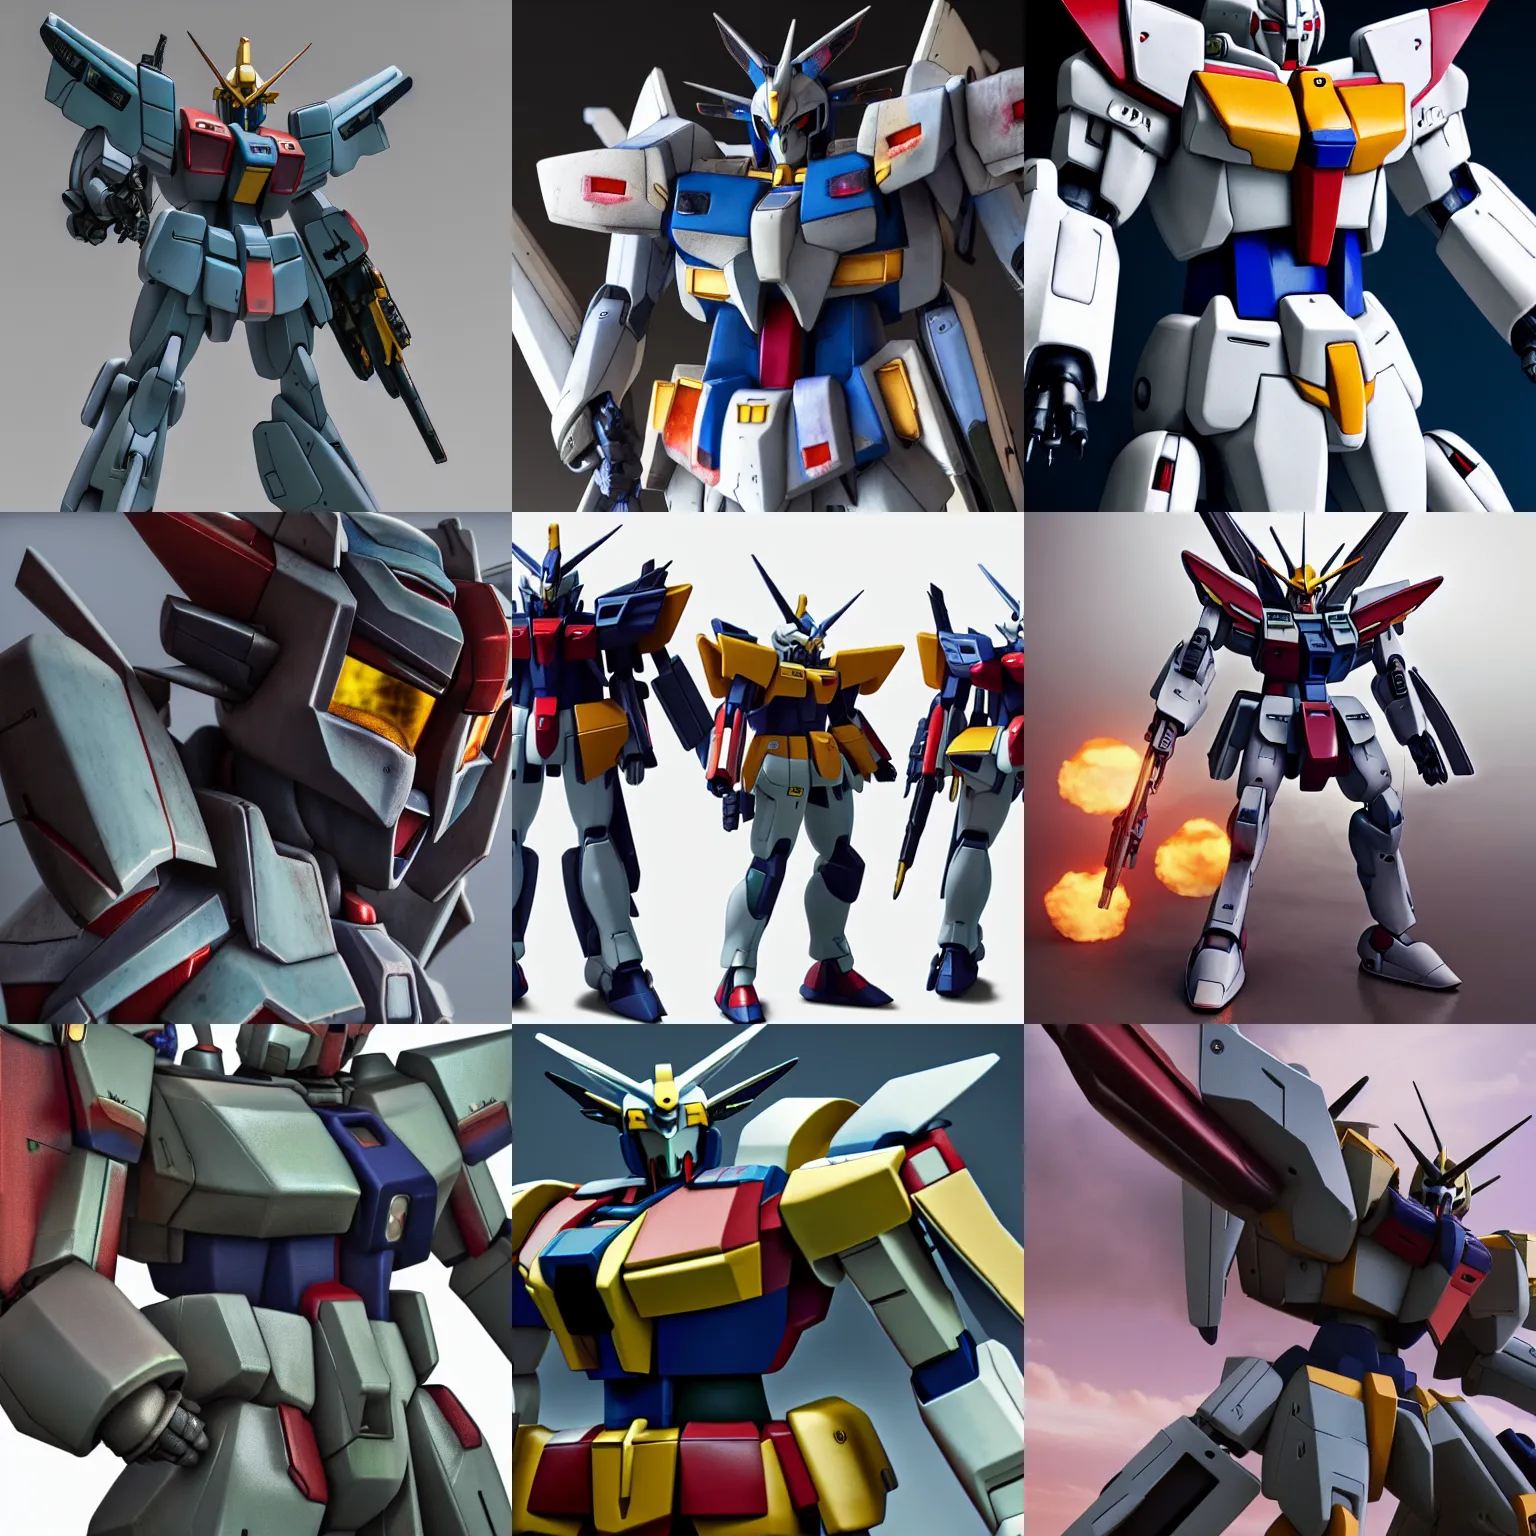 Prompt: photo of Gundam, photorealistic, octane render, HD, intricate details